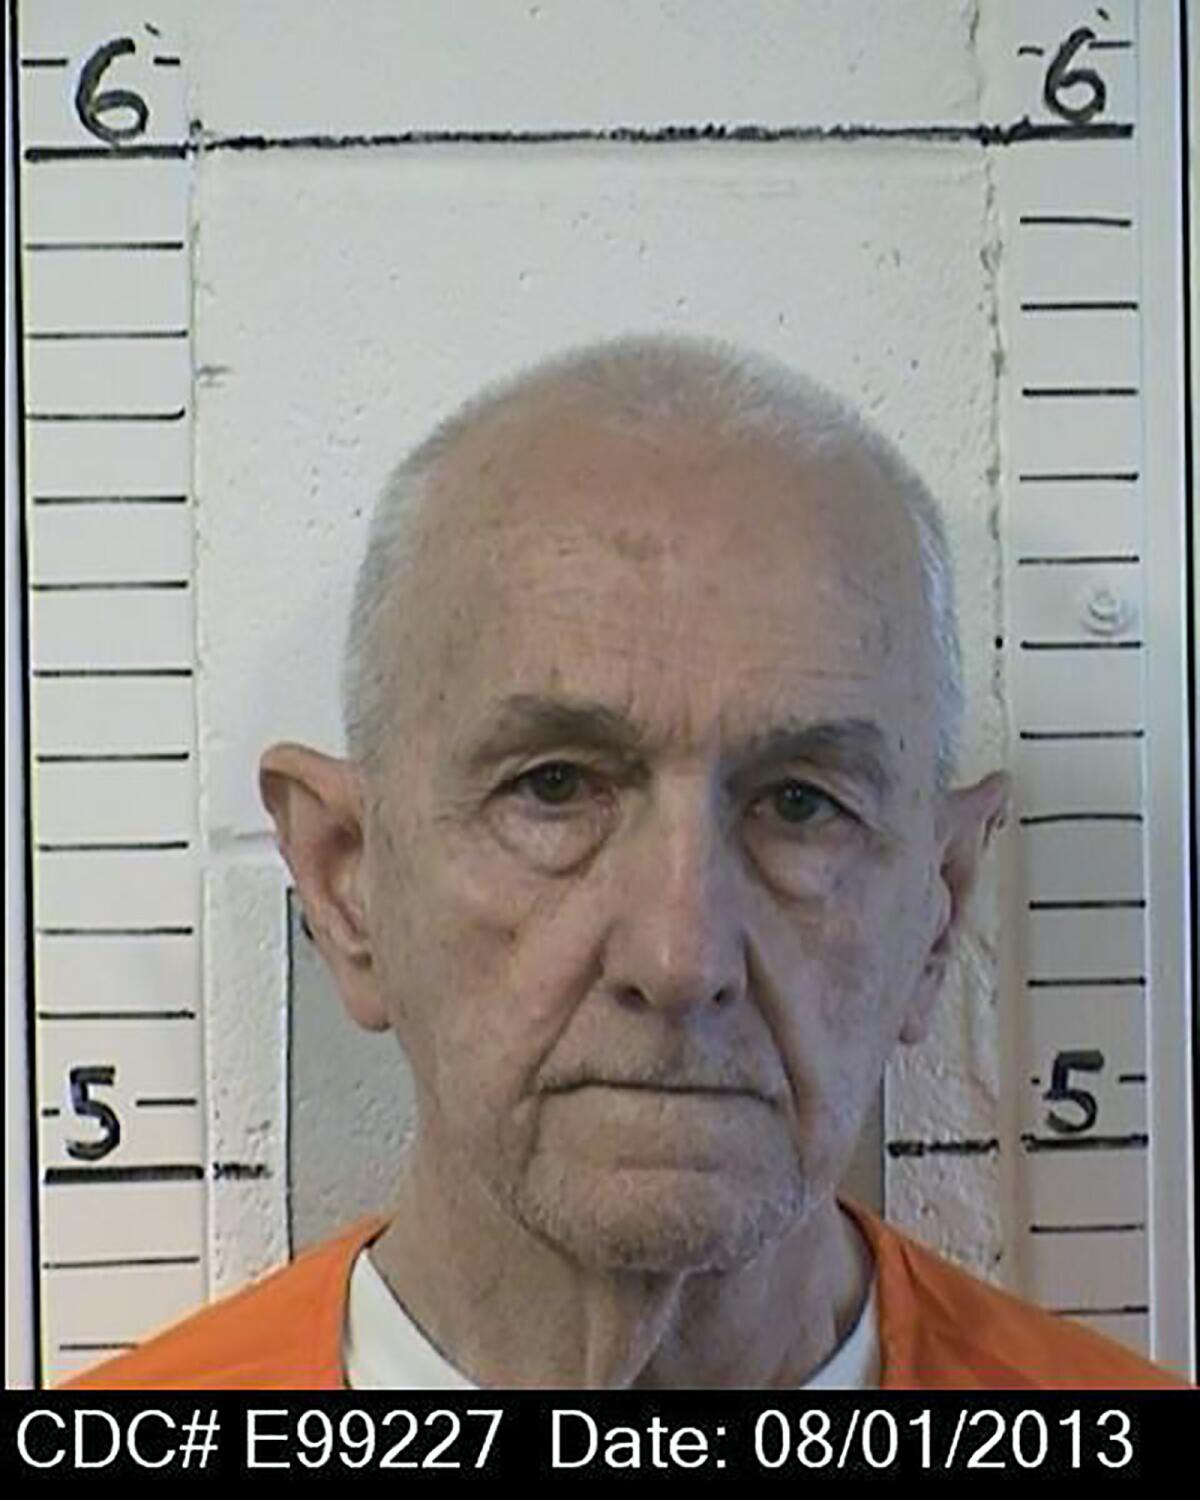 Mug shot of inmate Roger Reece Kibbe